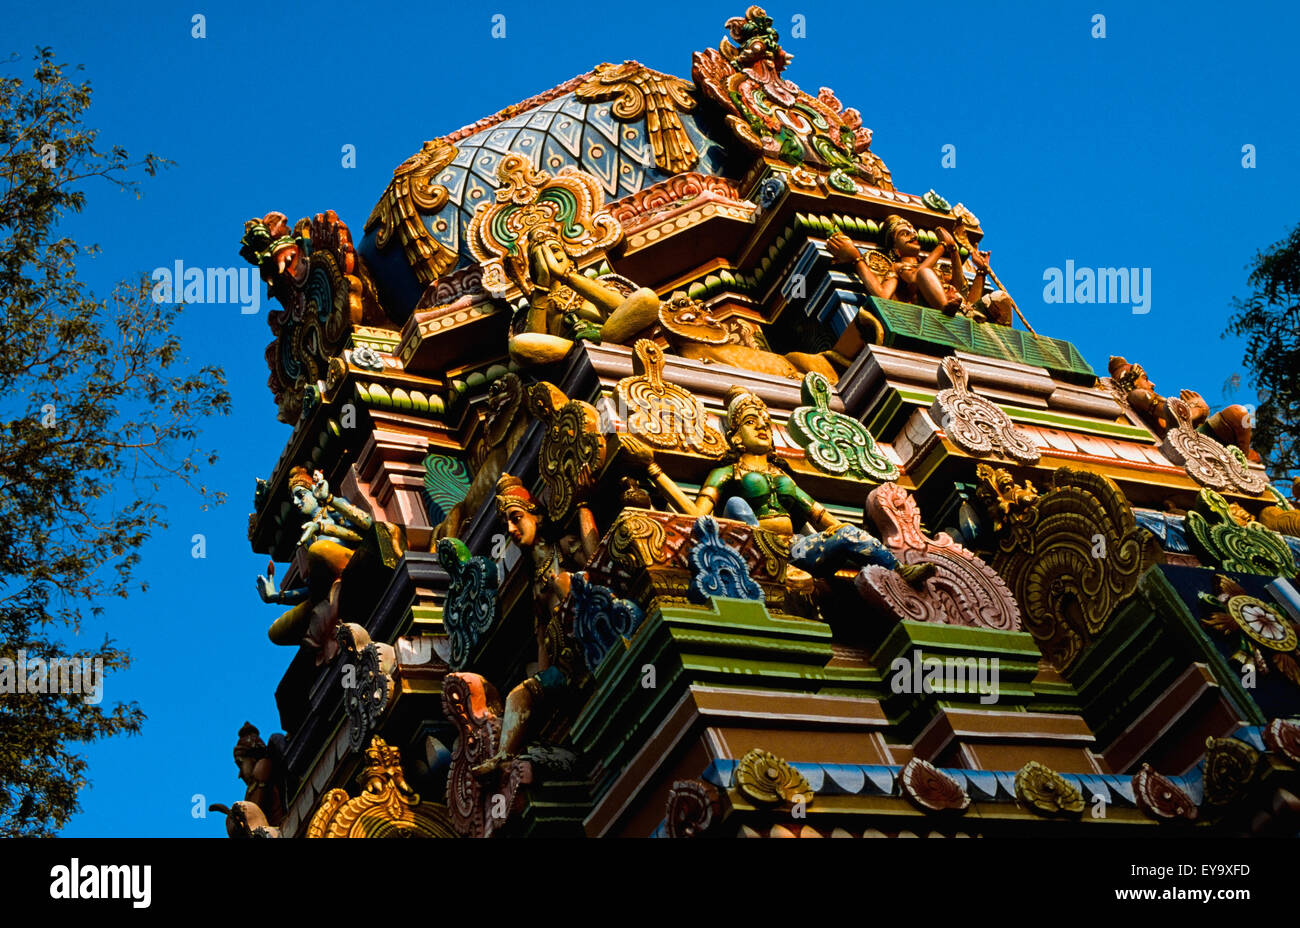 Bunte Tempel Ornamentik, schließen - bis Stockfoto